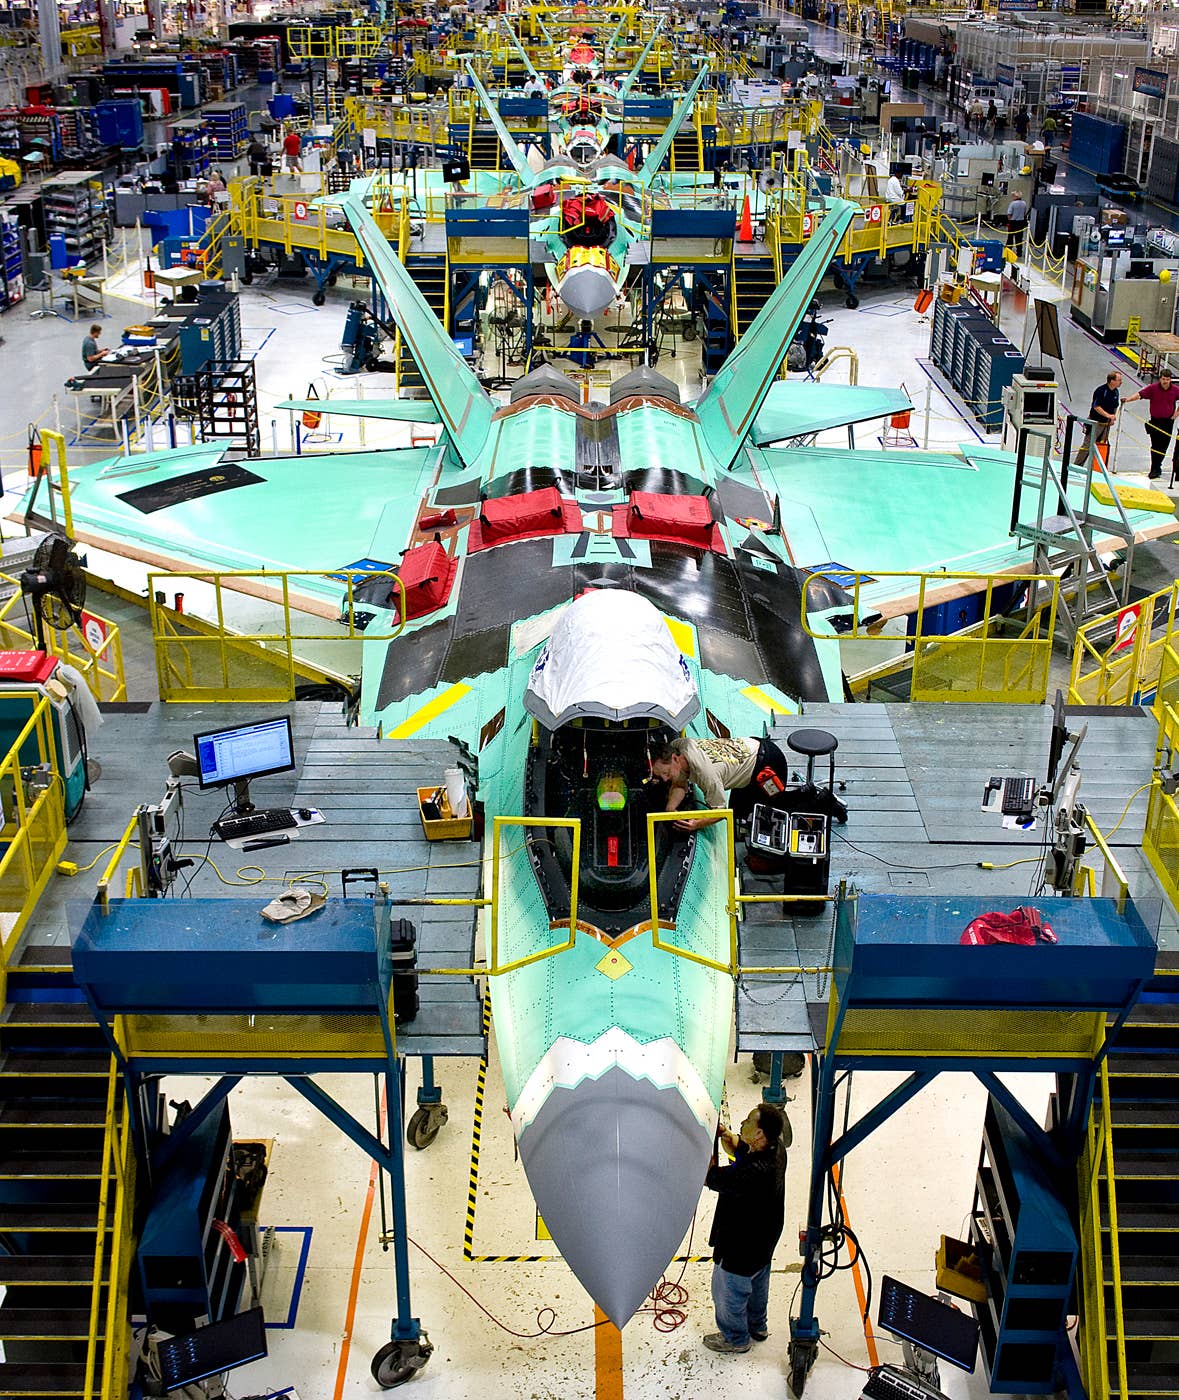 F-22s on the production line. (Lockheed Martin)